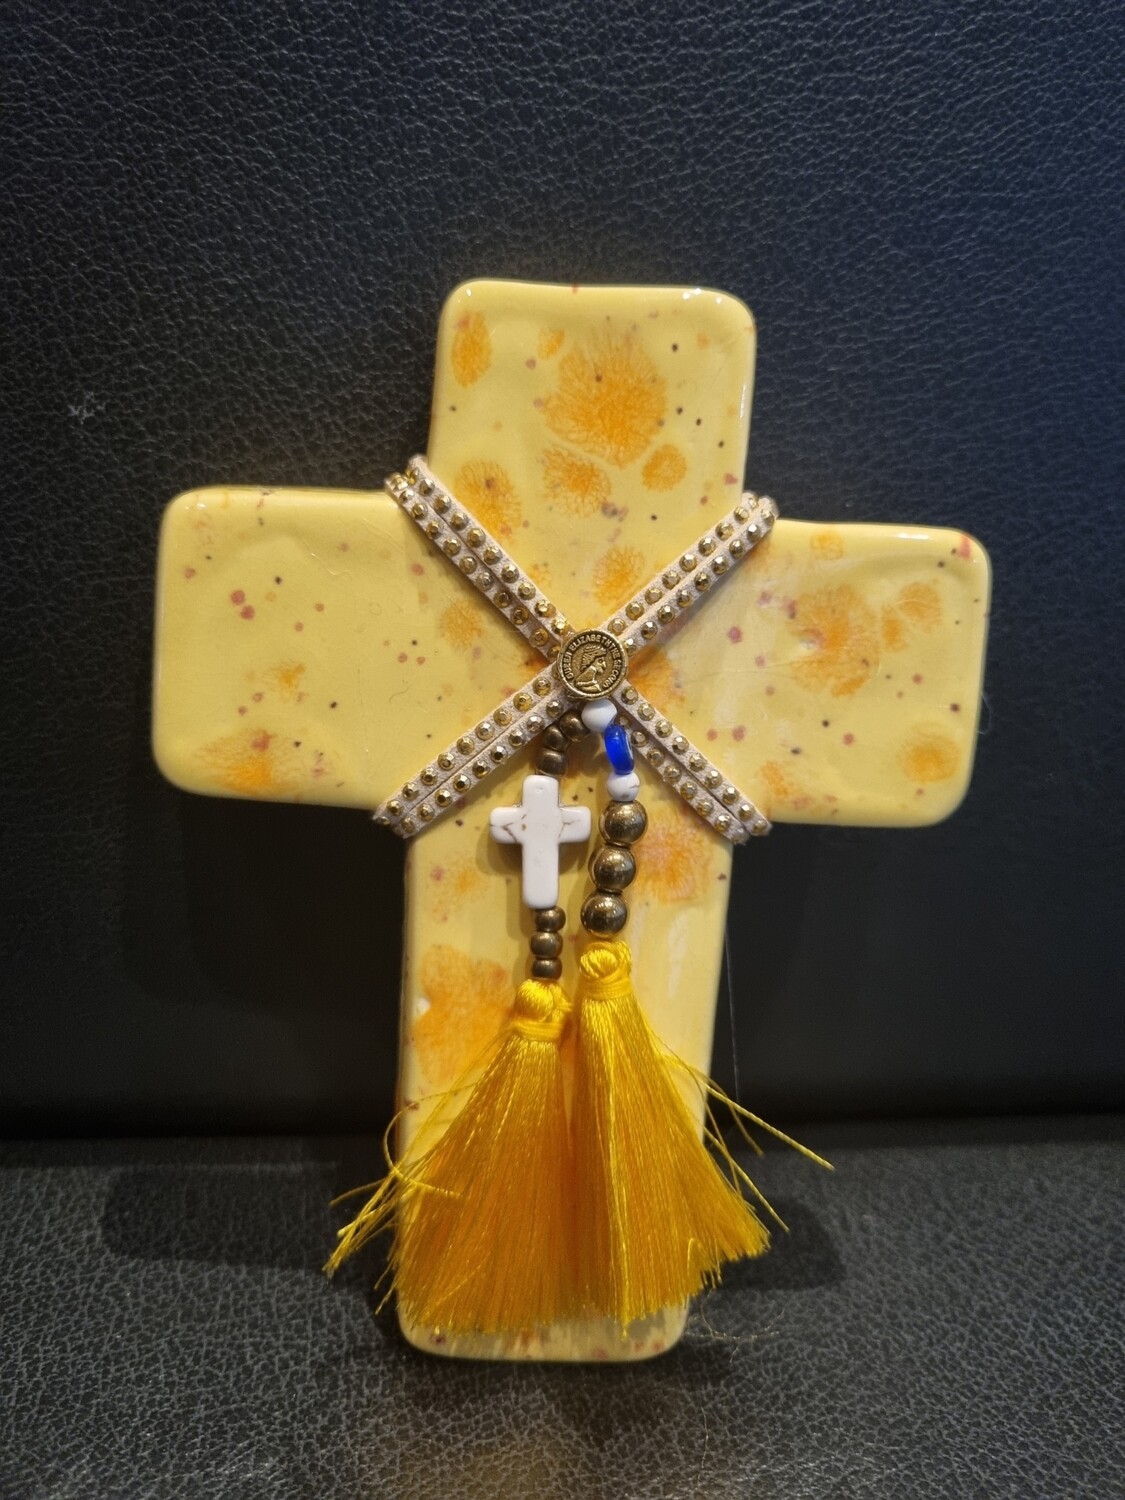 Small yellow ceramic cross